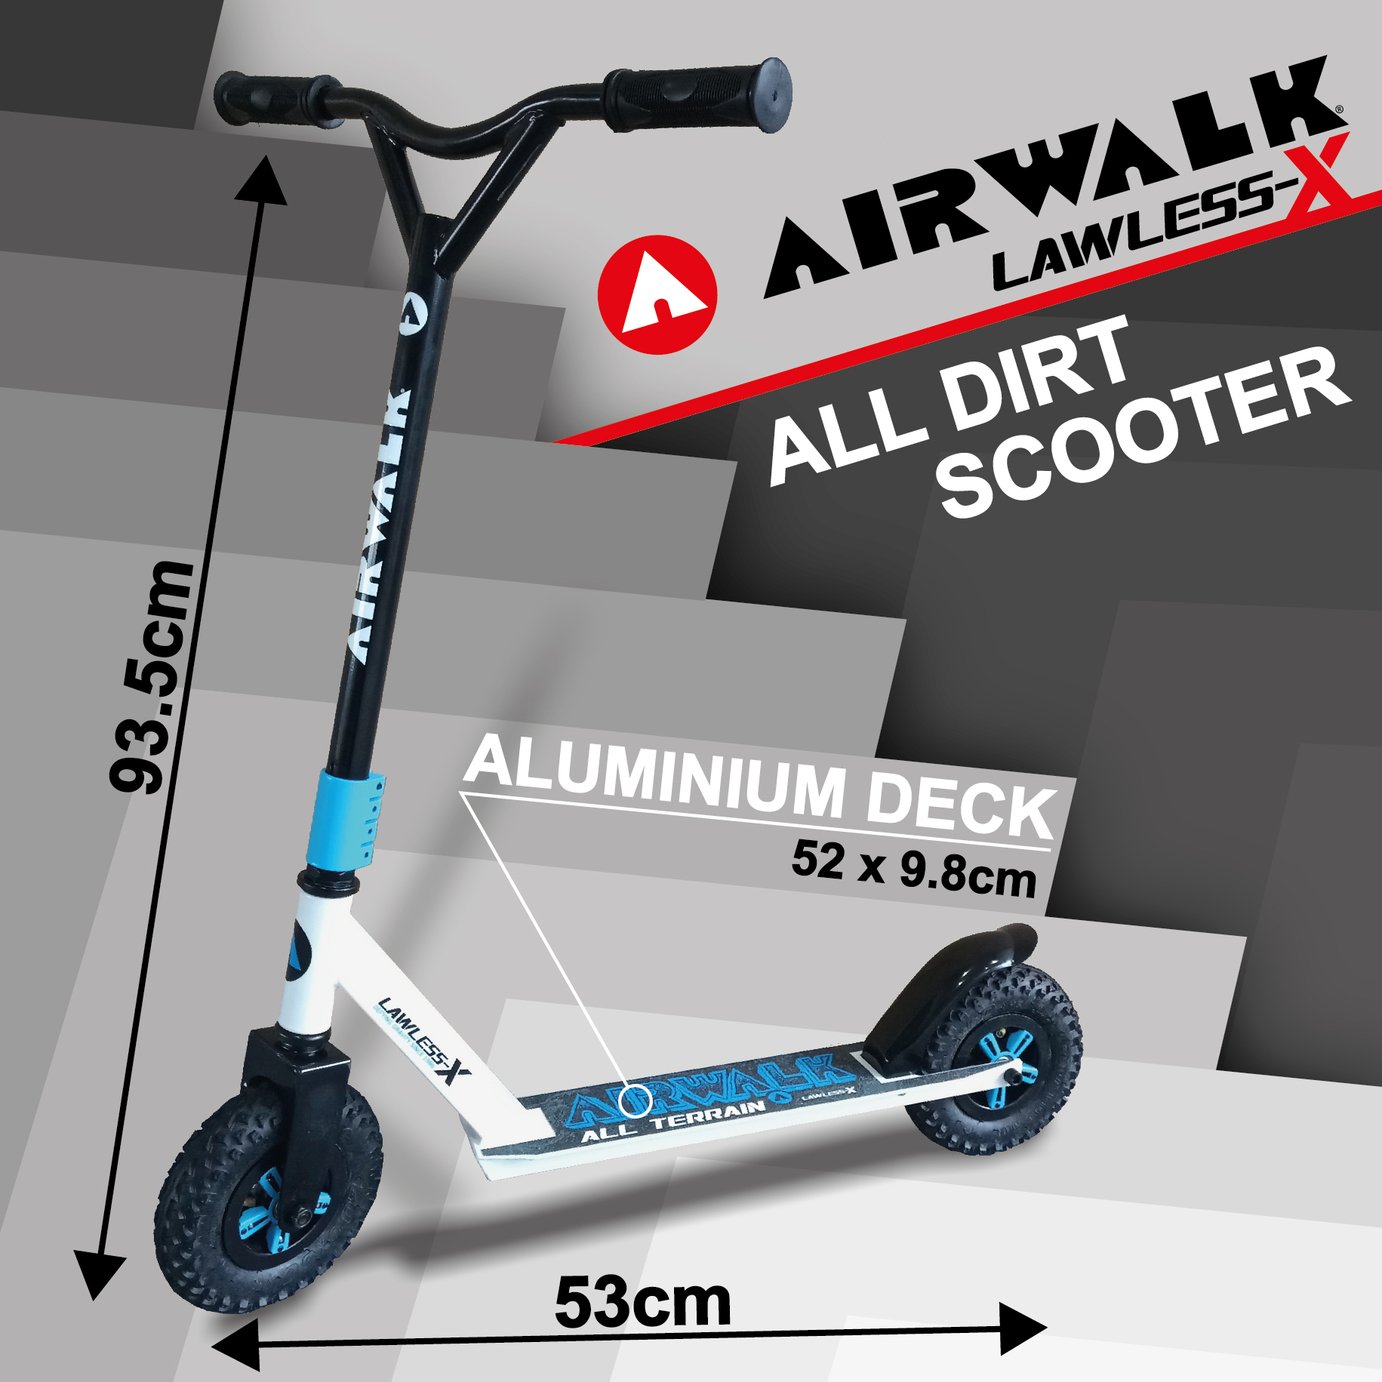 Airwalk Dirt Scooter Review